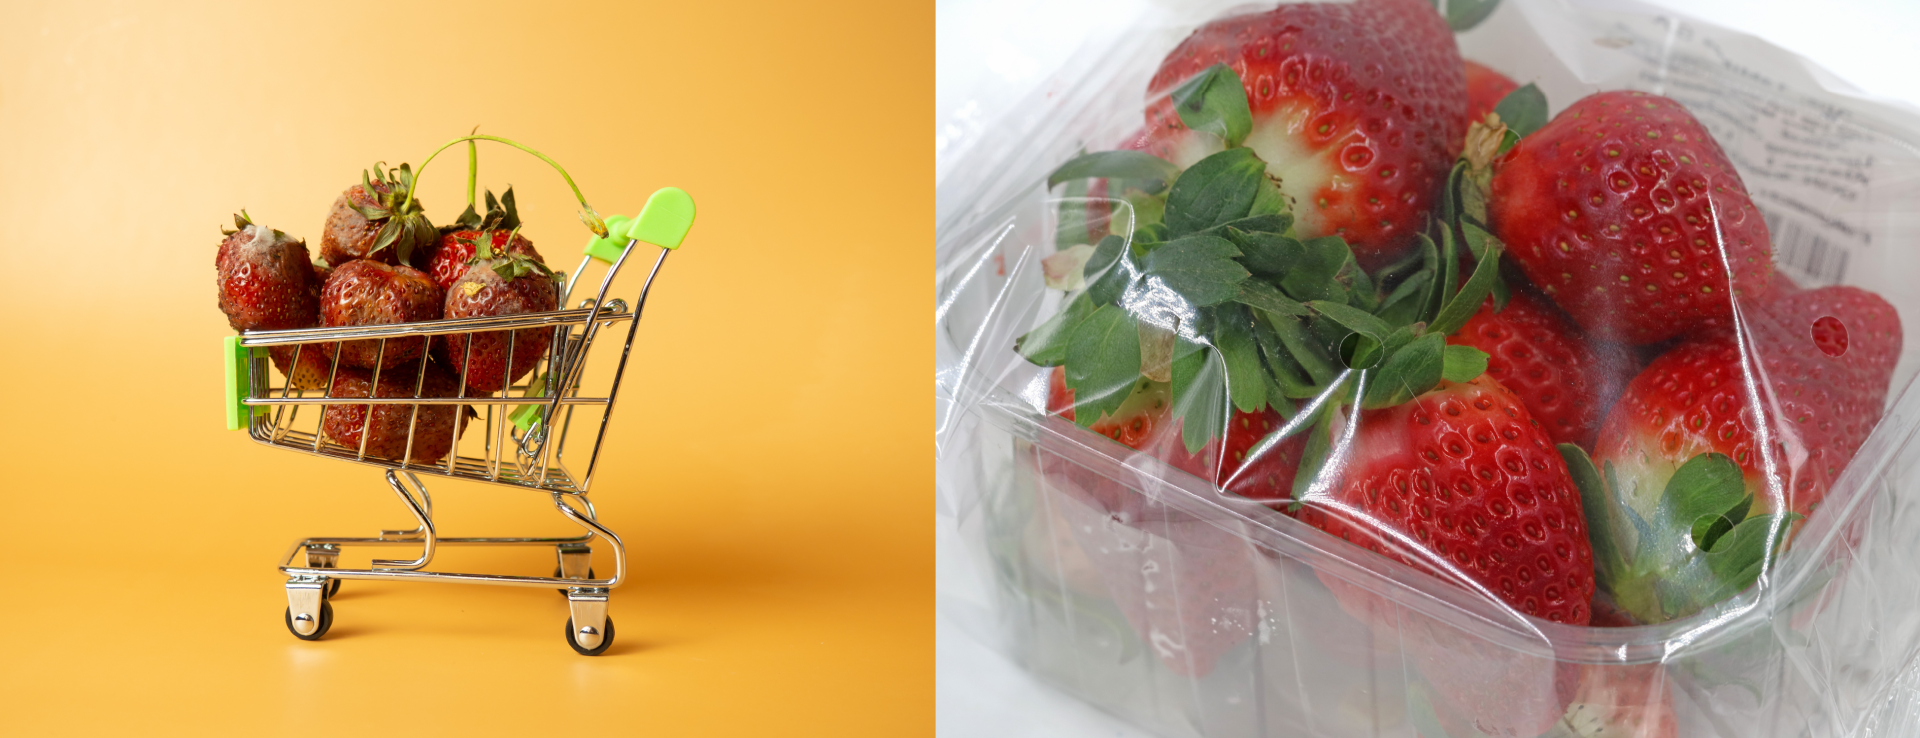 decree-france-plastic-packaging-ban-fruit-vegetable